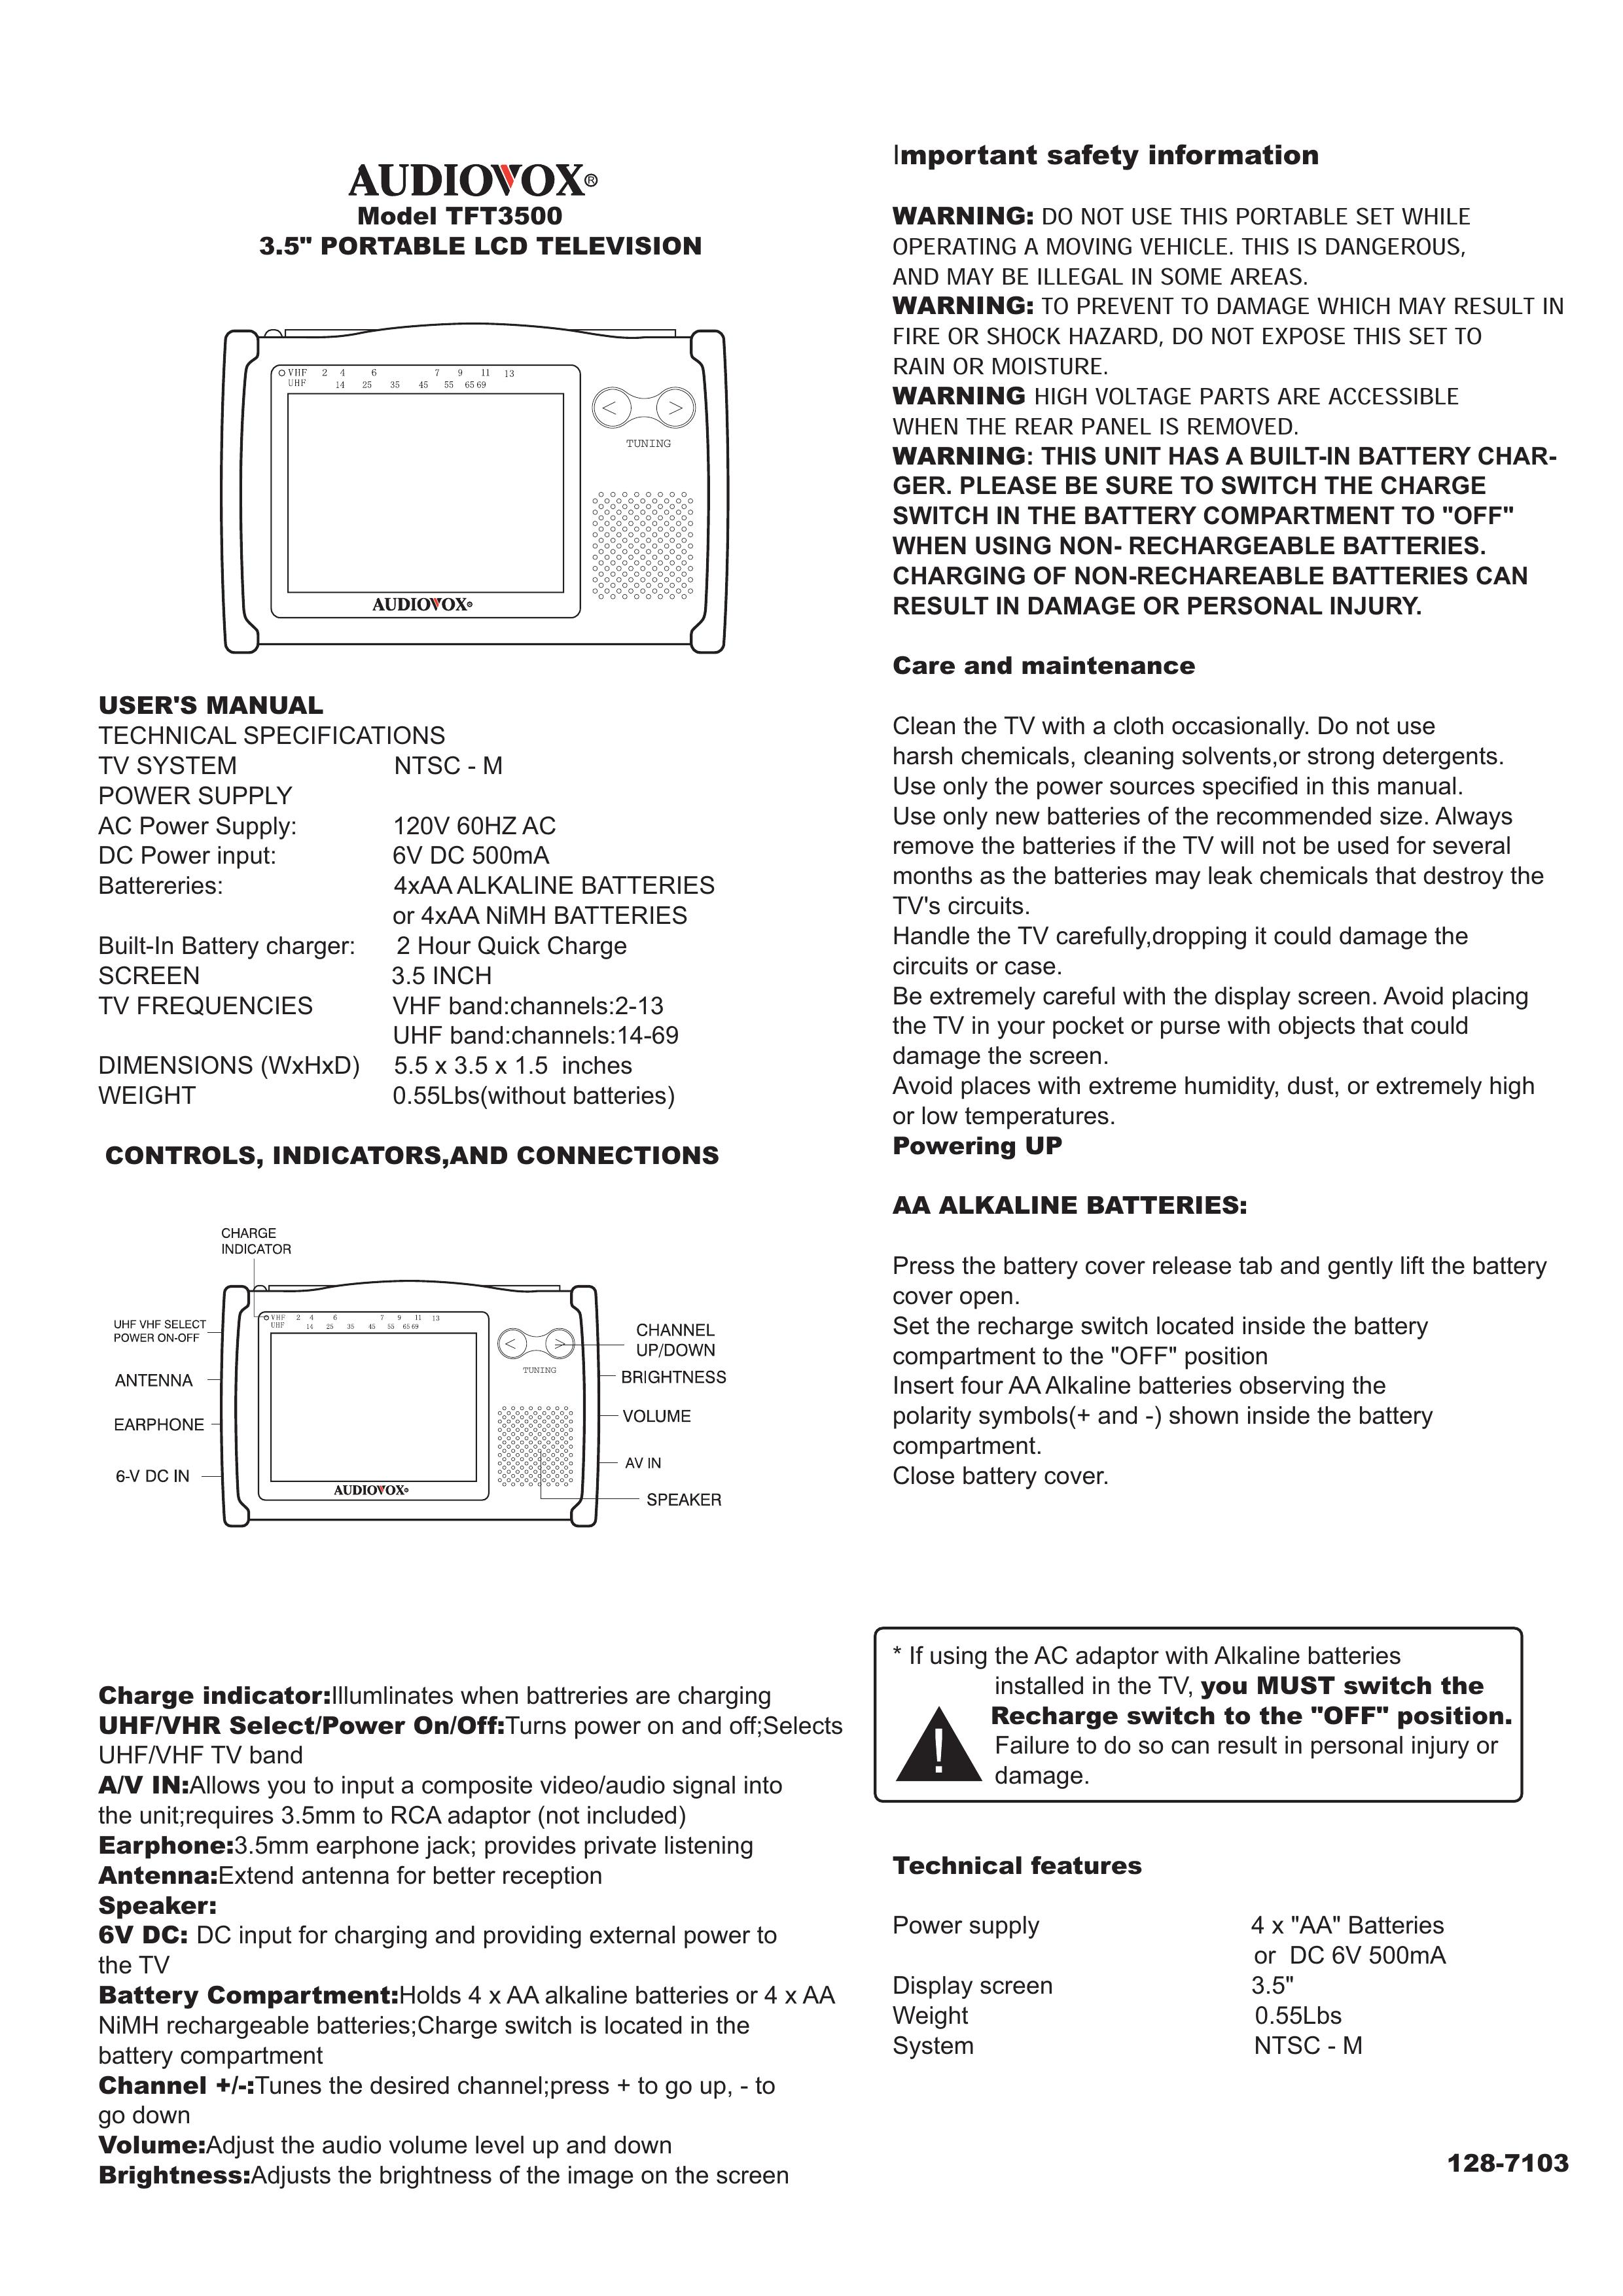 Audiovox TFT3500 Handheld TV User Manual (Page 1)